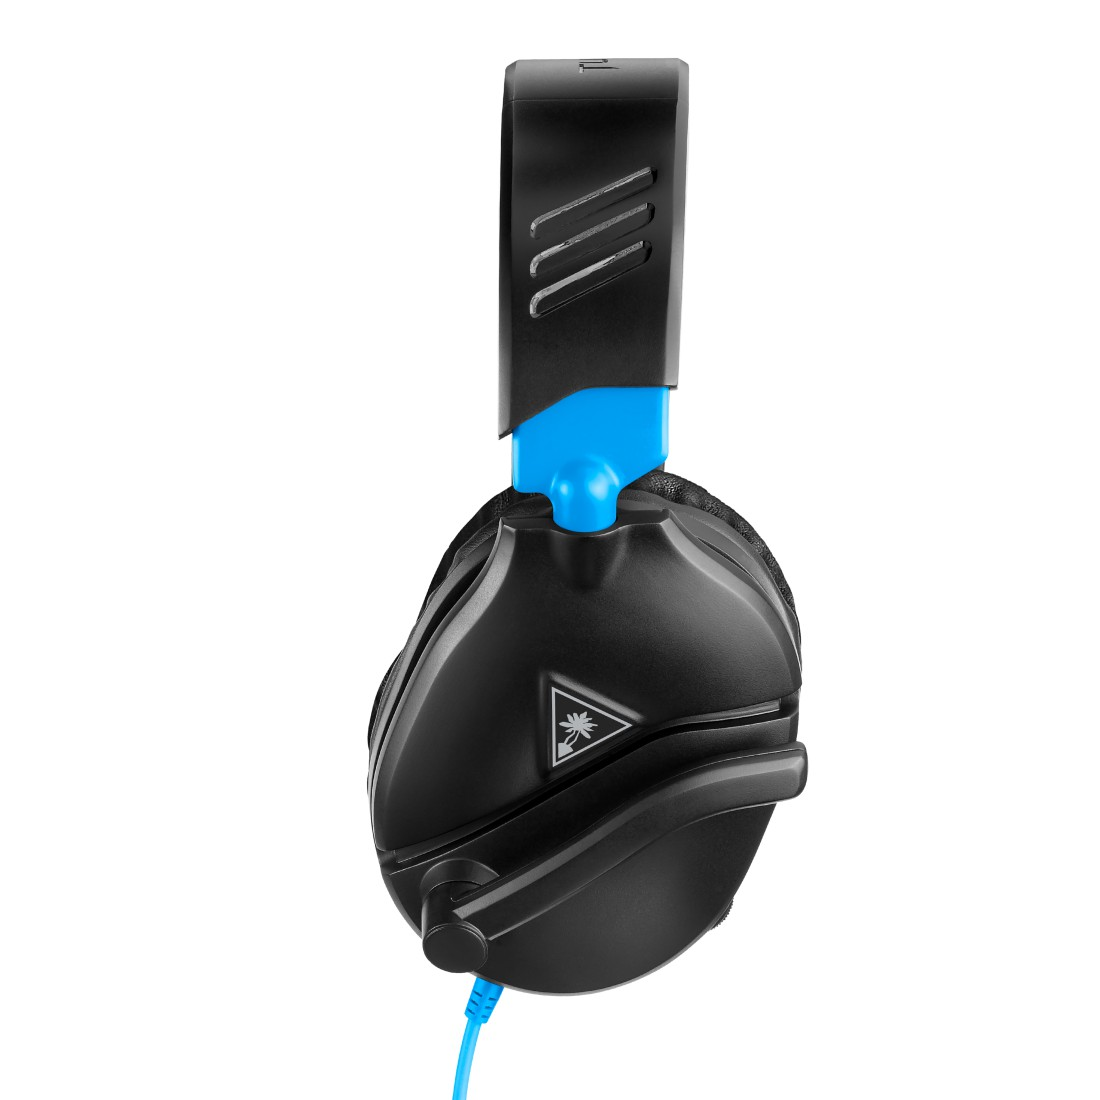 BEACH Schwarz/Blau Over-ear Recon Headset Gaming 70, TURTLE